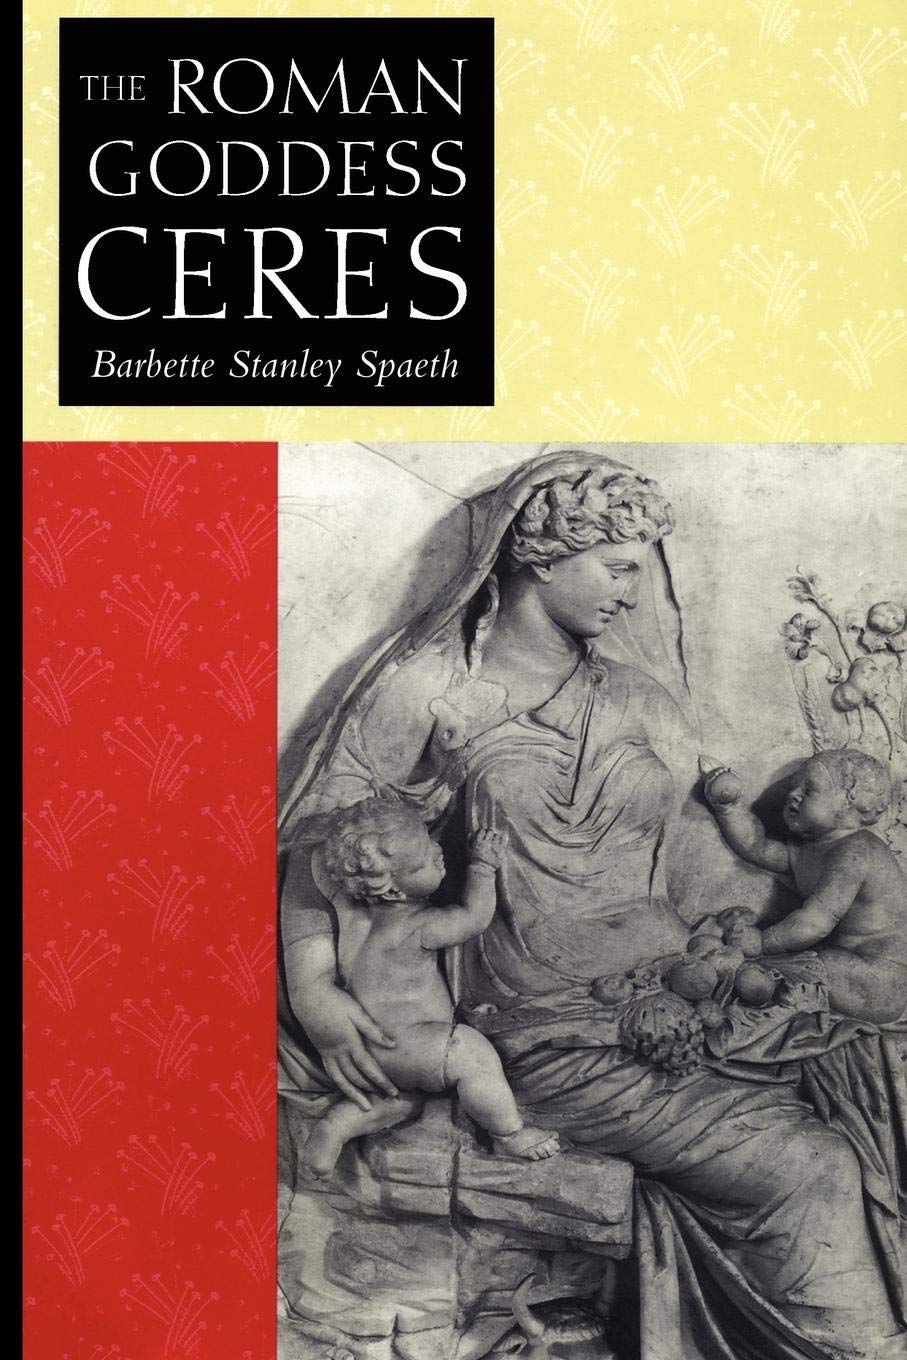 The Roman Goddess Ceres